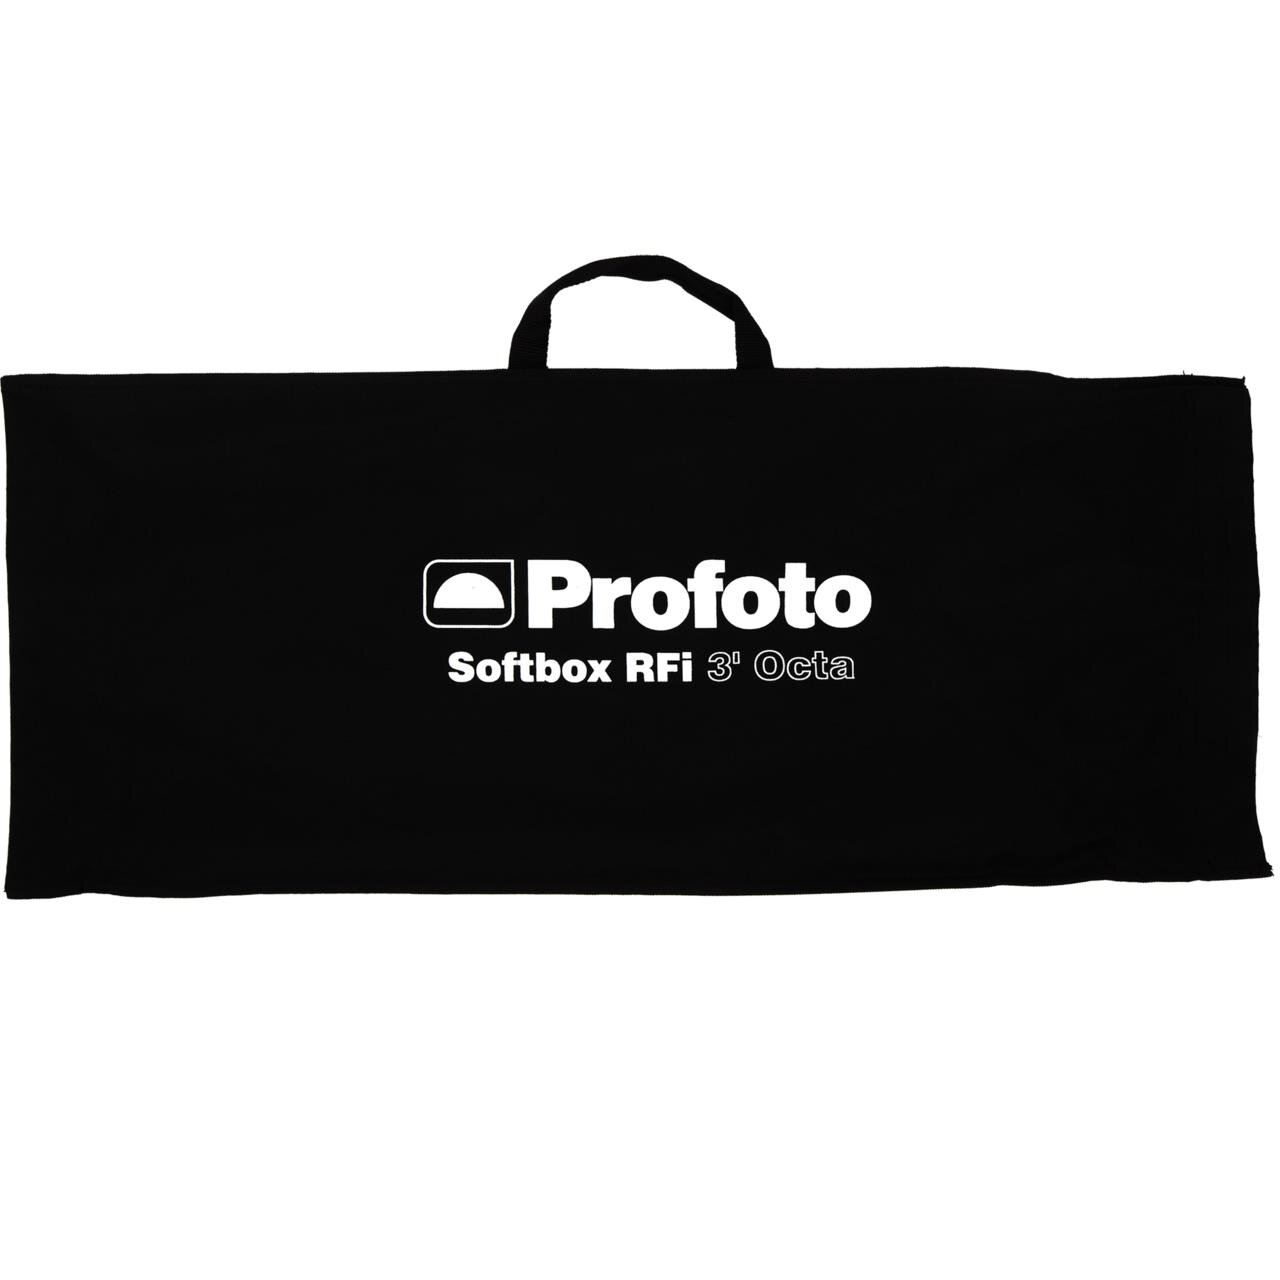 254711_f_profoto-rfi-softbox-3-octa-bag_productimage.png.jpeg